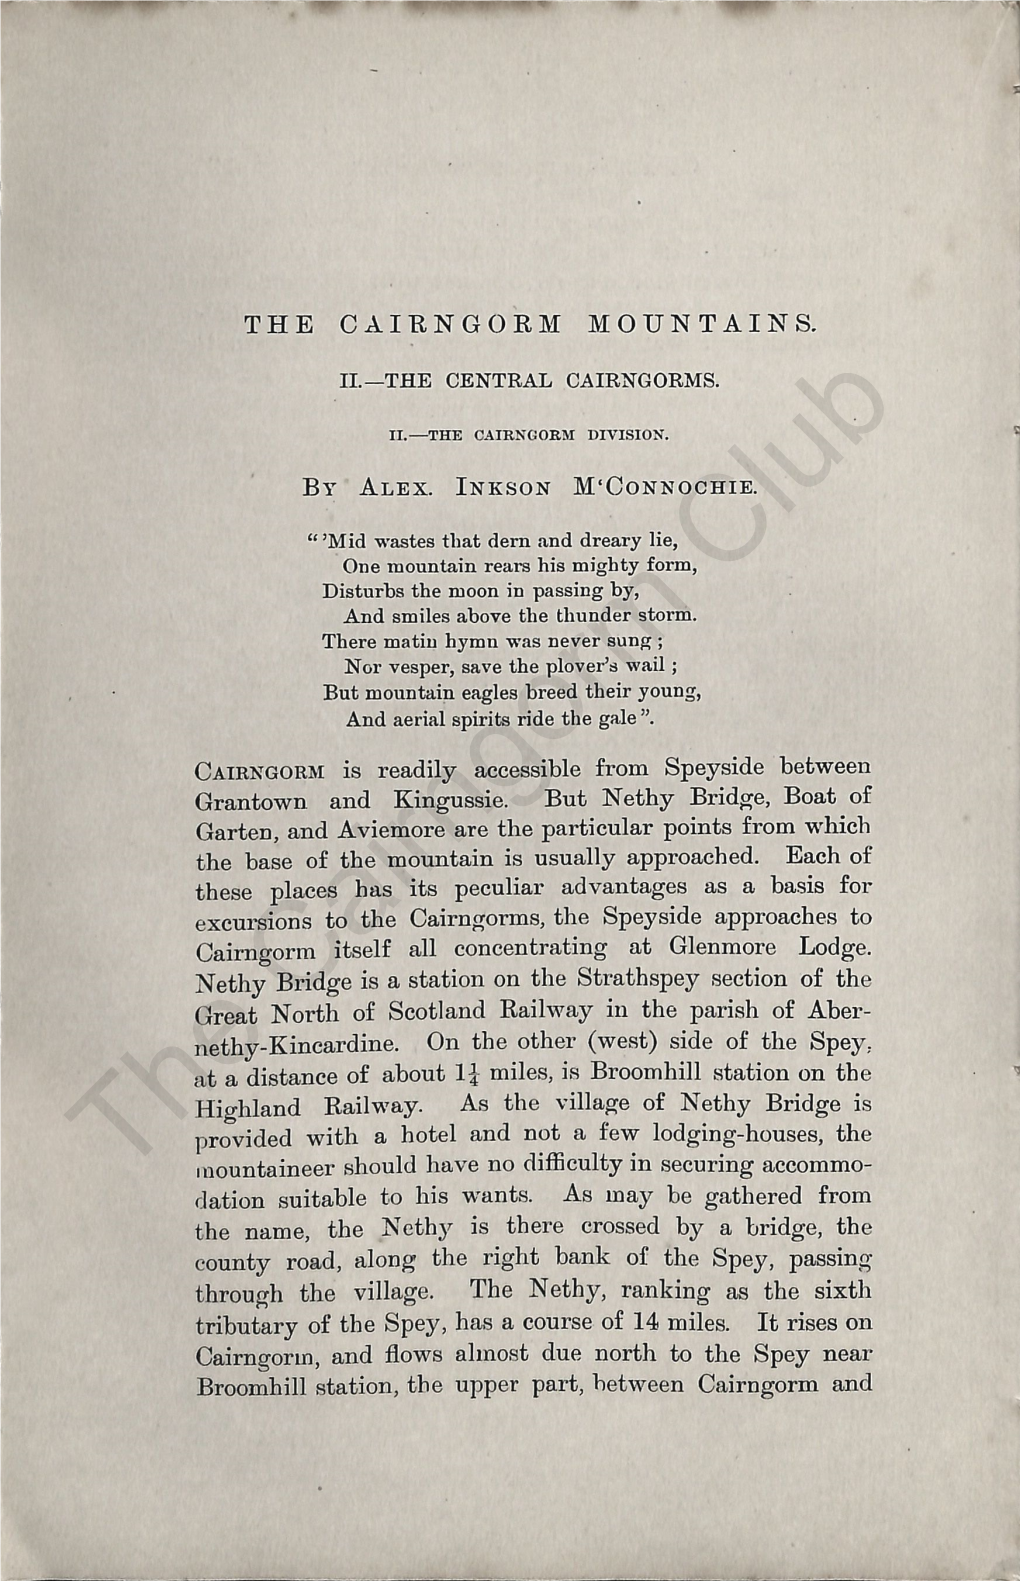 The Cairngorm Club Journal 006, 1896